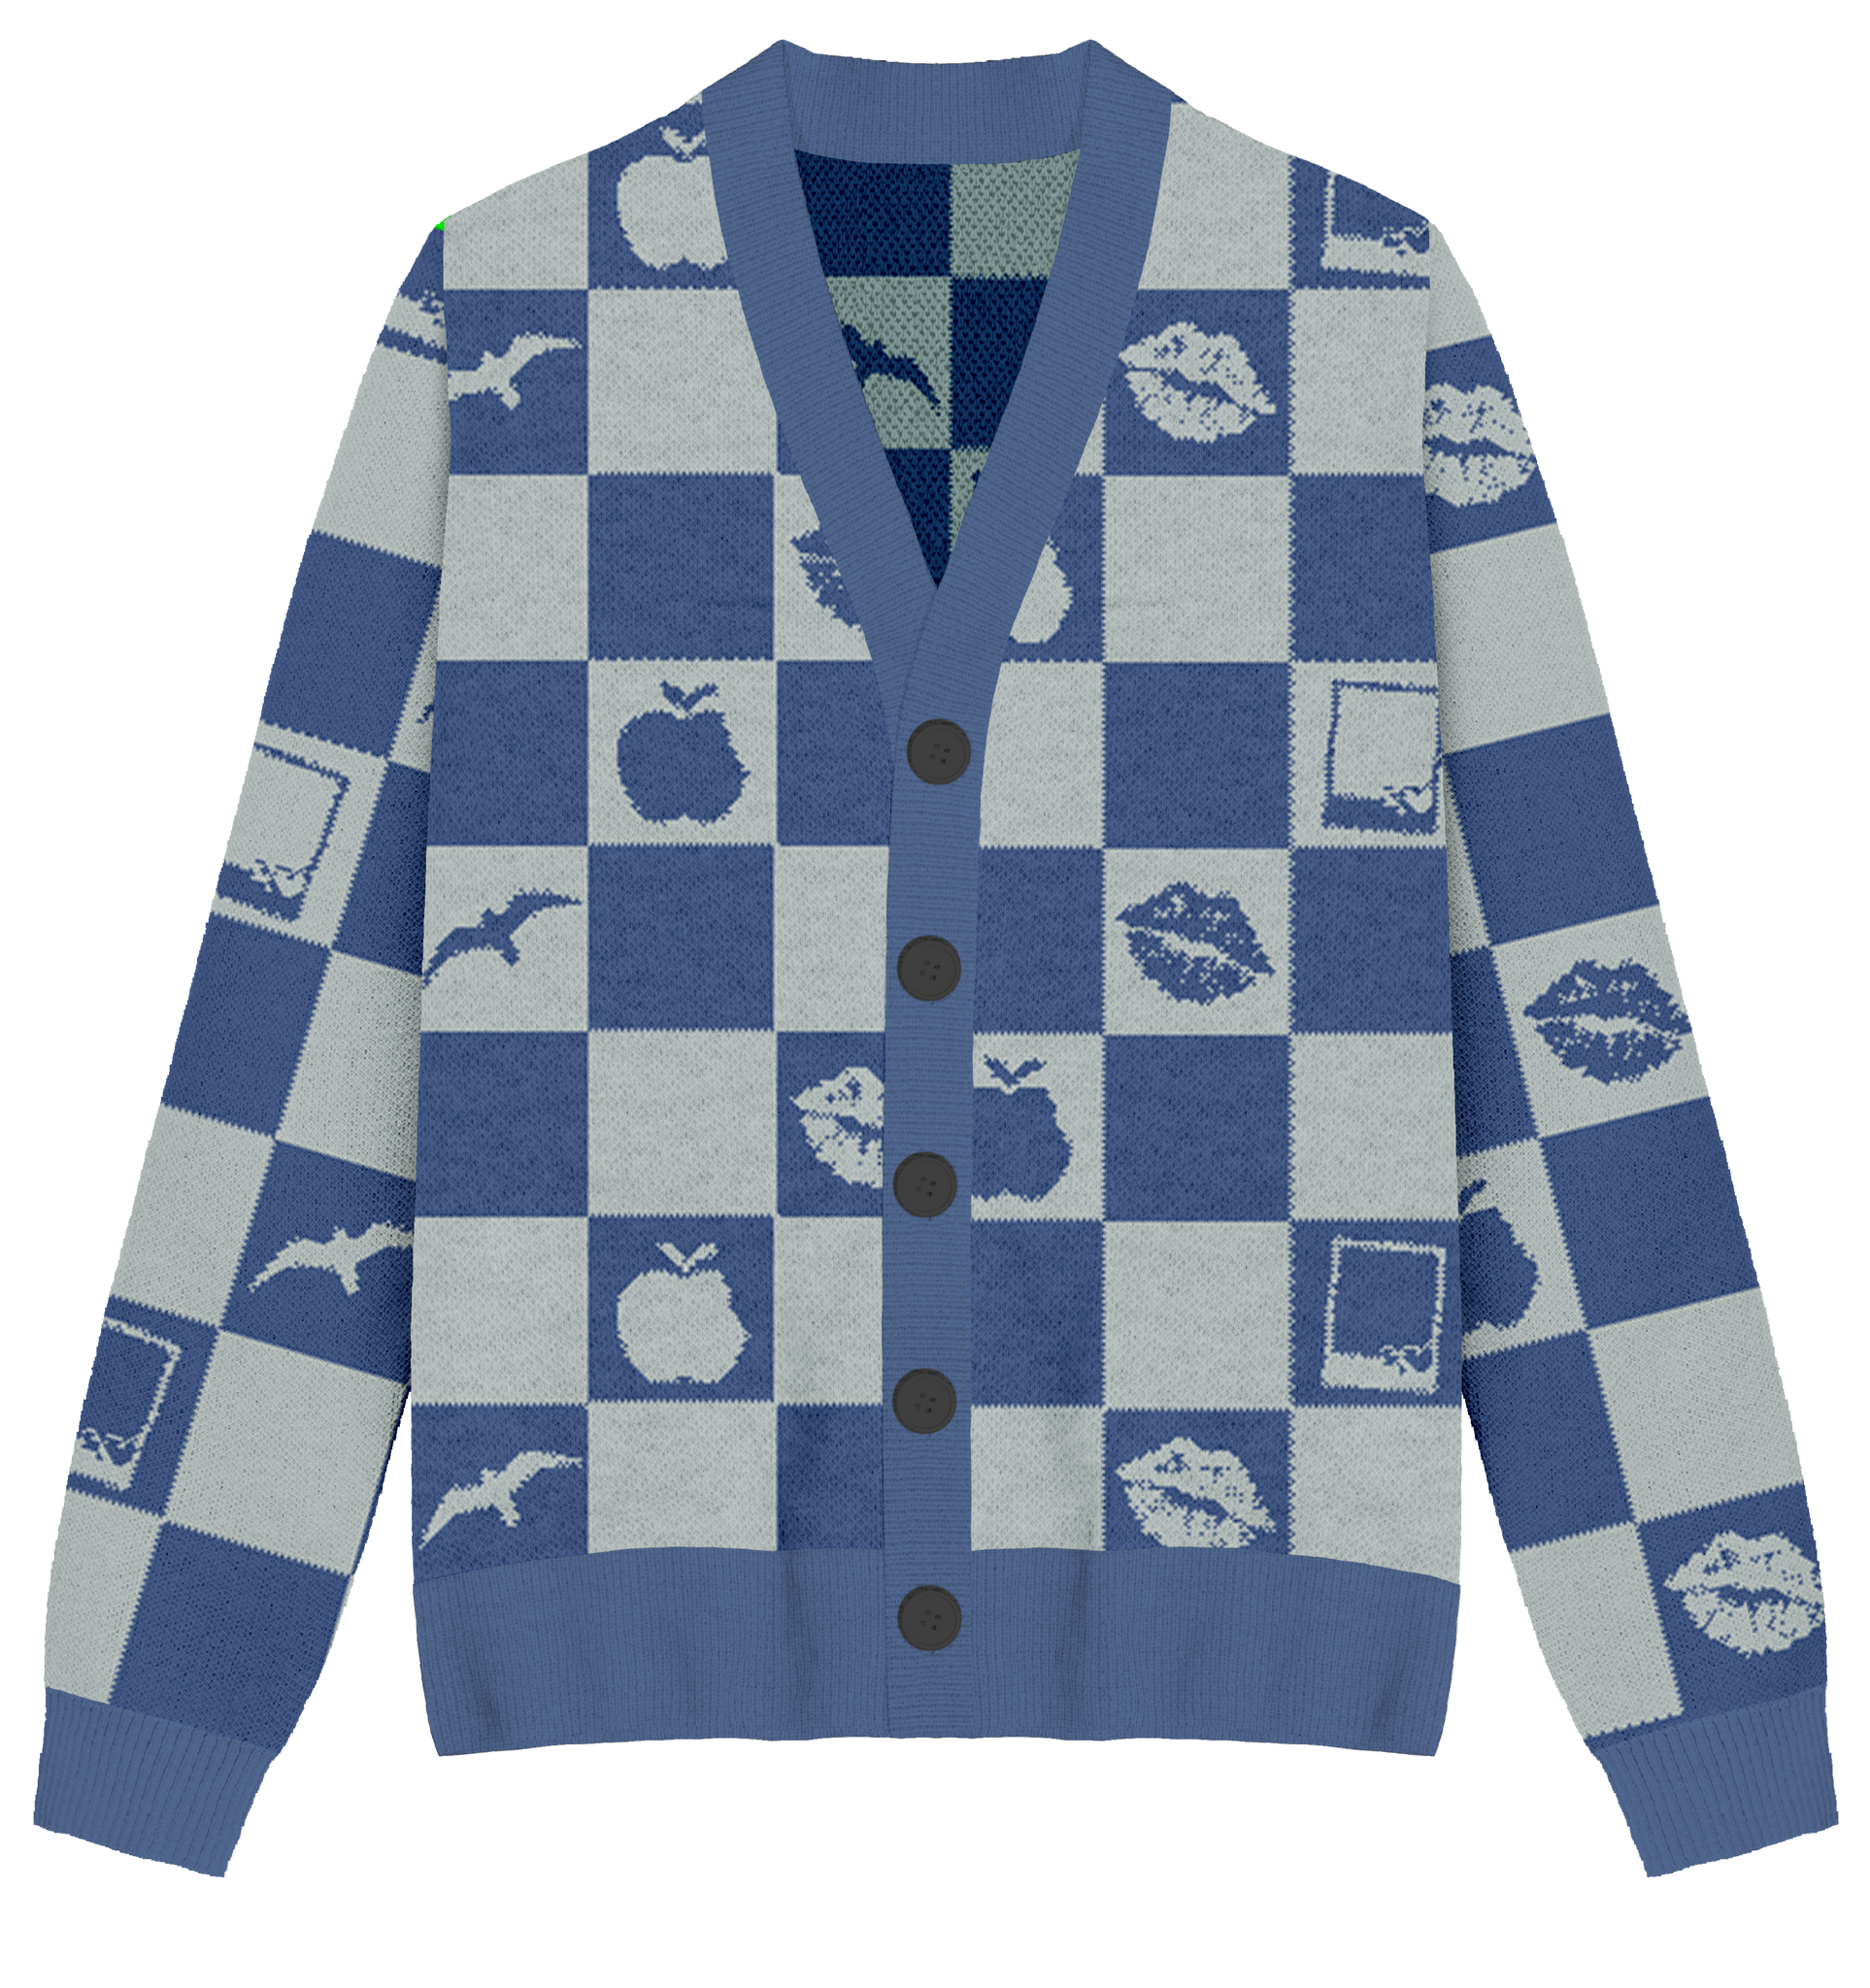 1989 Checkered Knit Cardigan